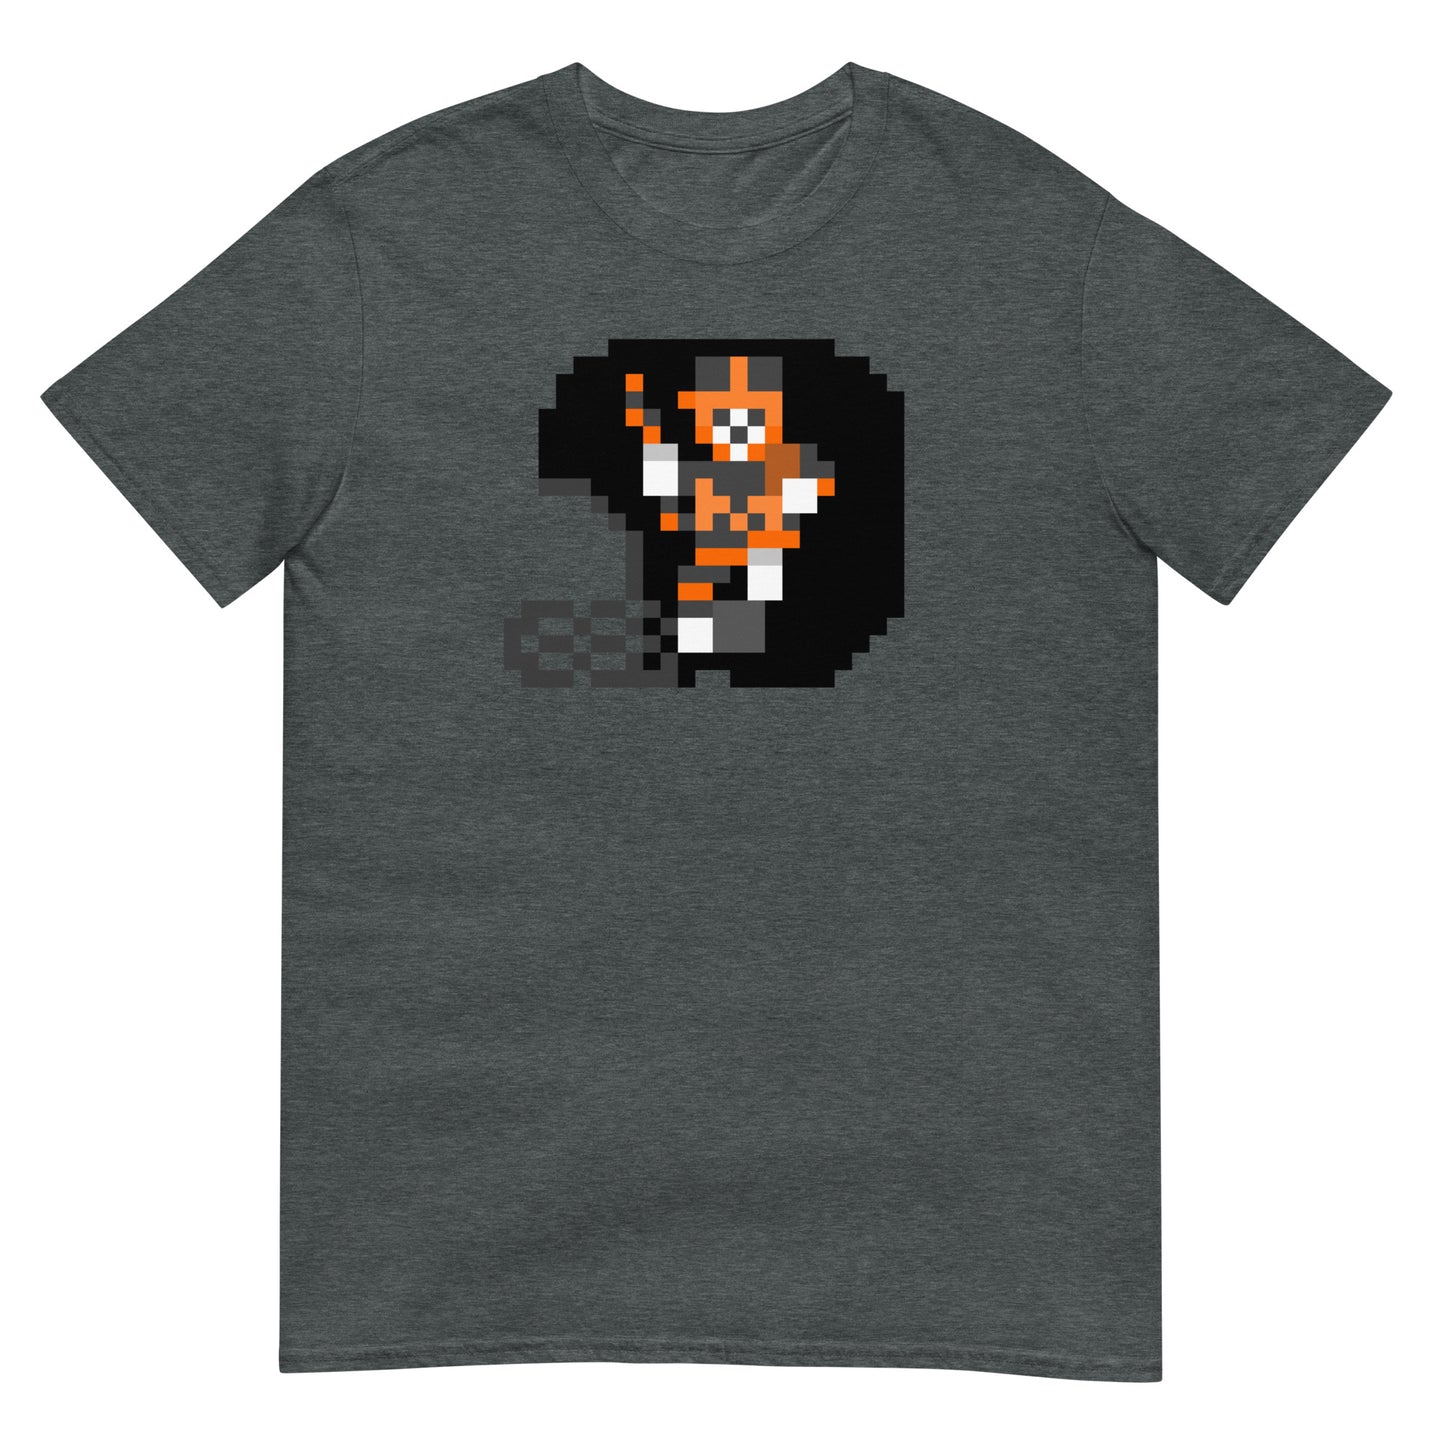 Massillon Washington Tigers Short-Sleeve Unisex T-Shirt